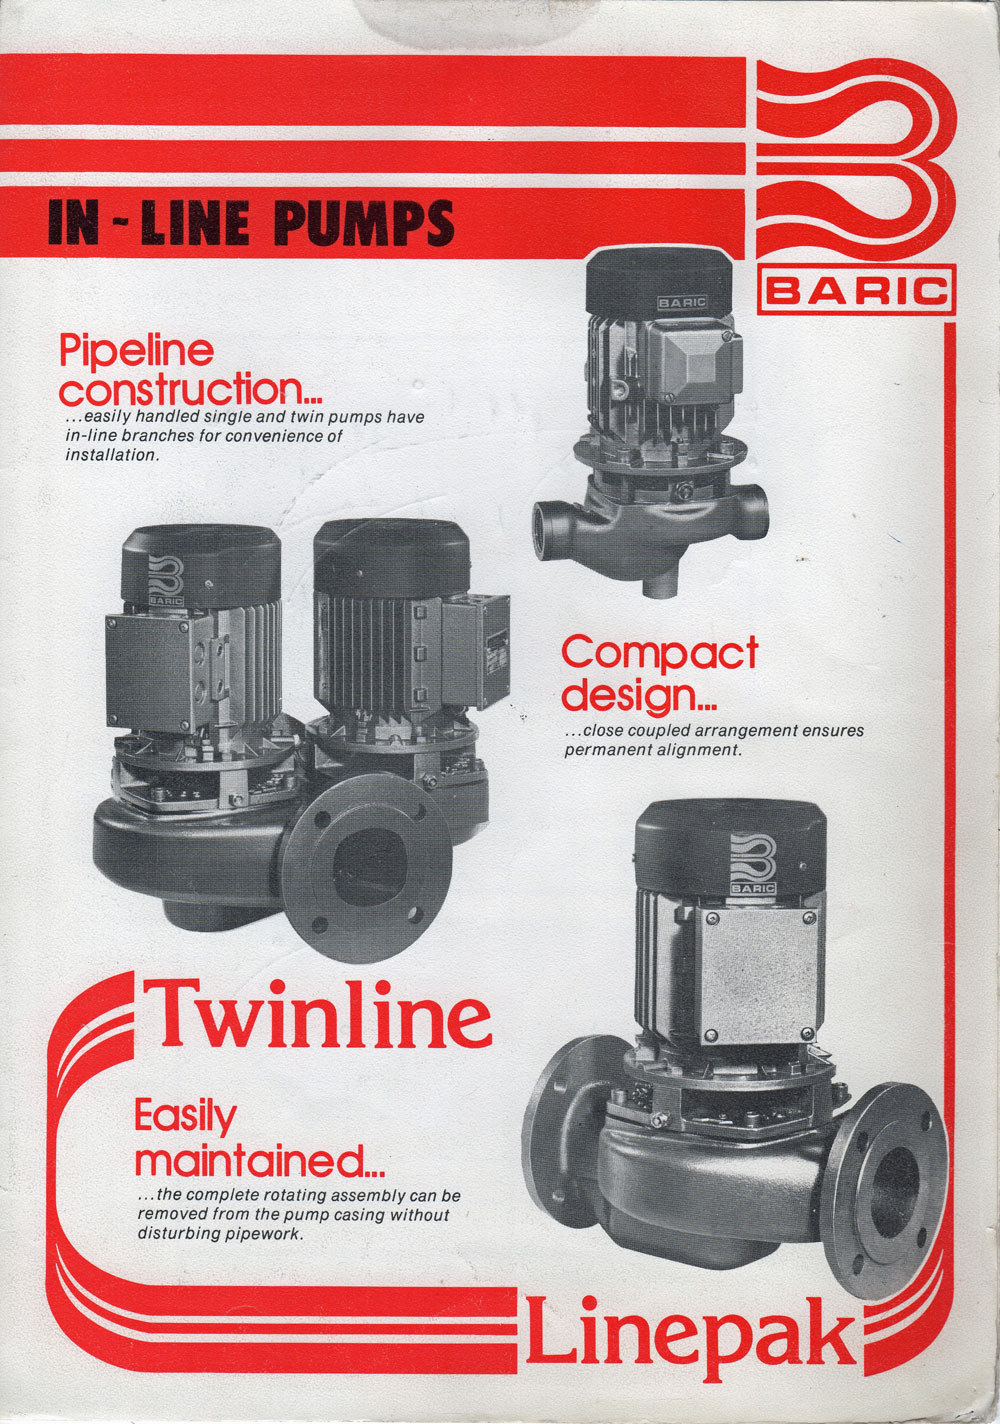 baric pumps linepak brochure - 1980